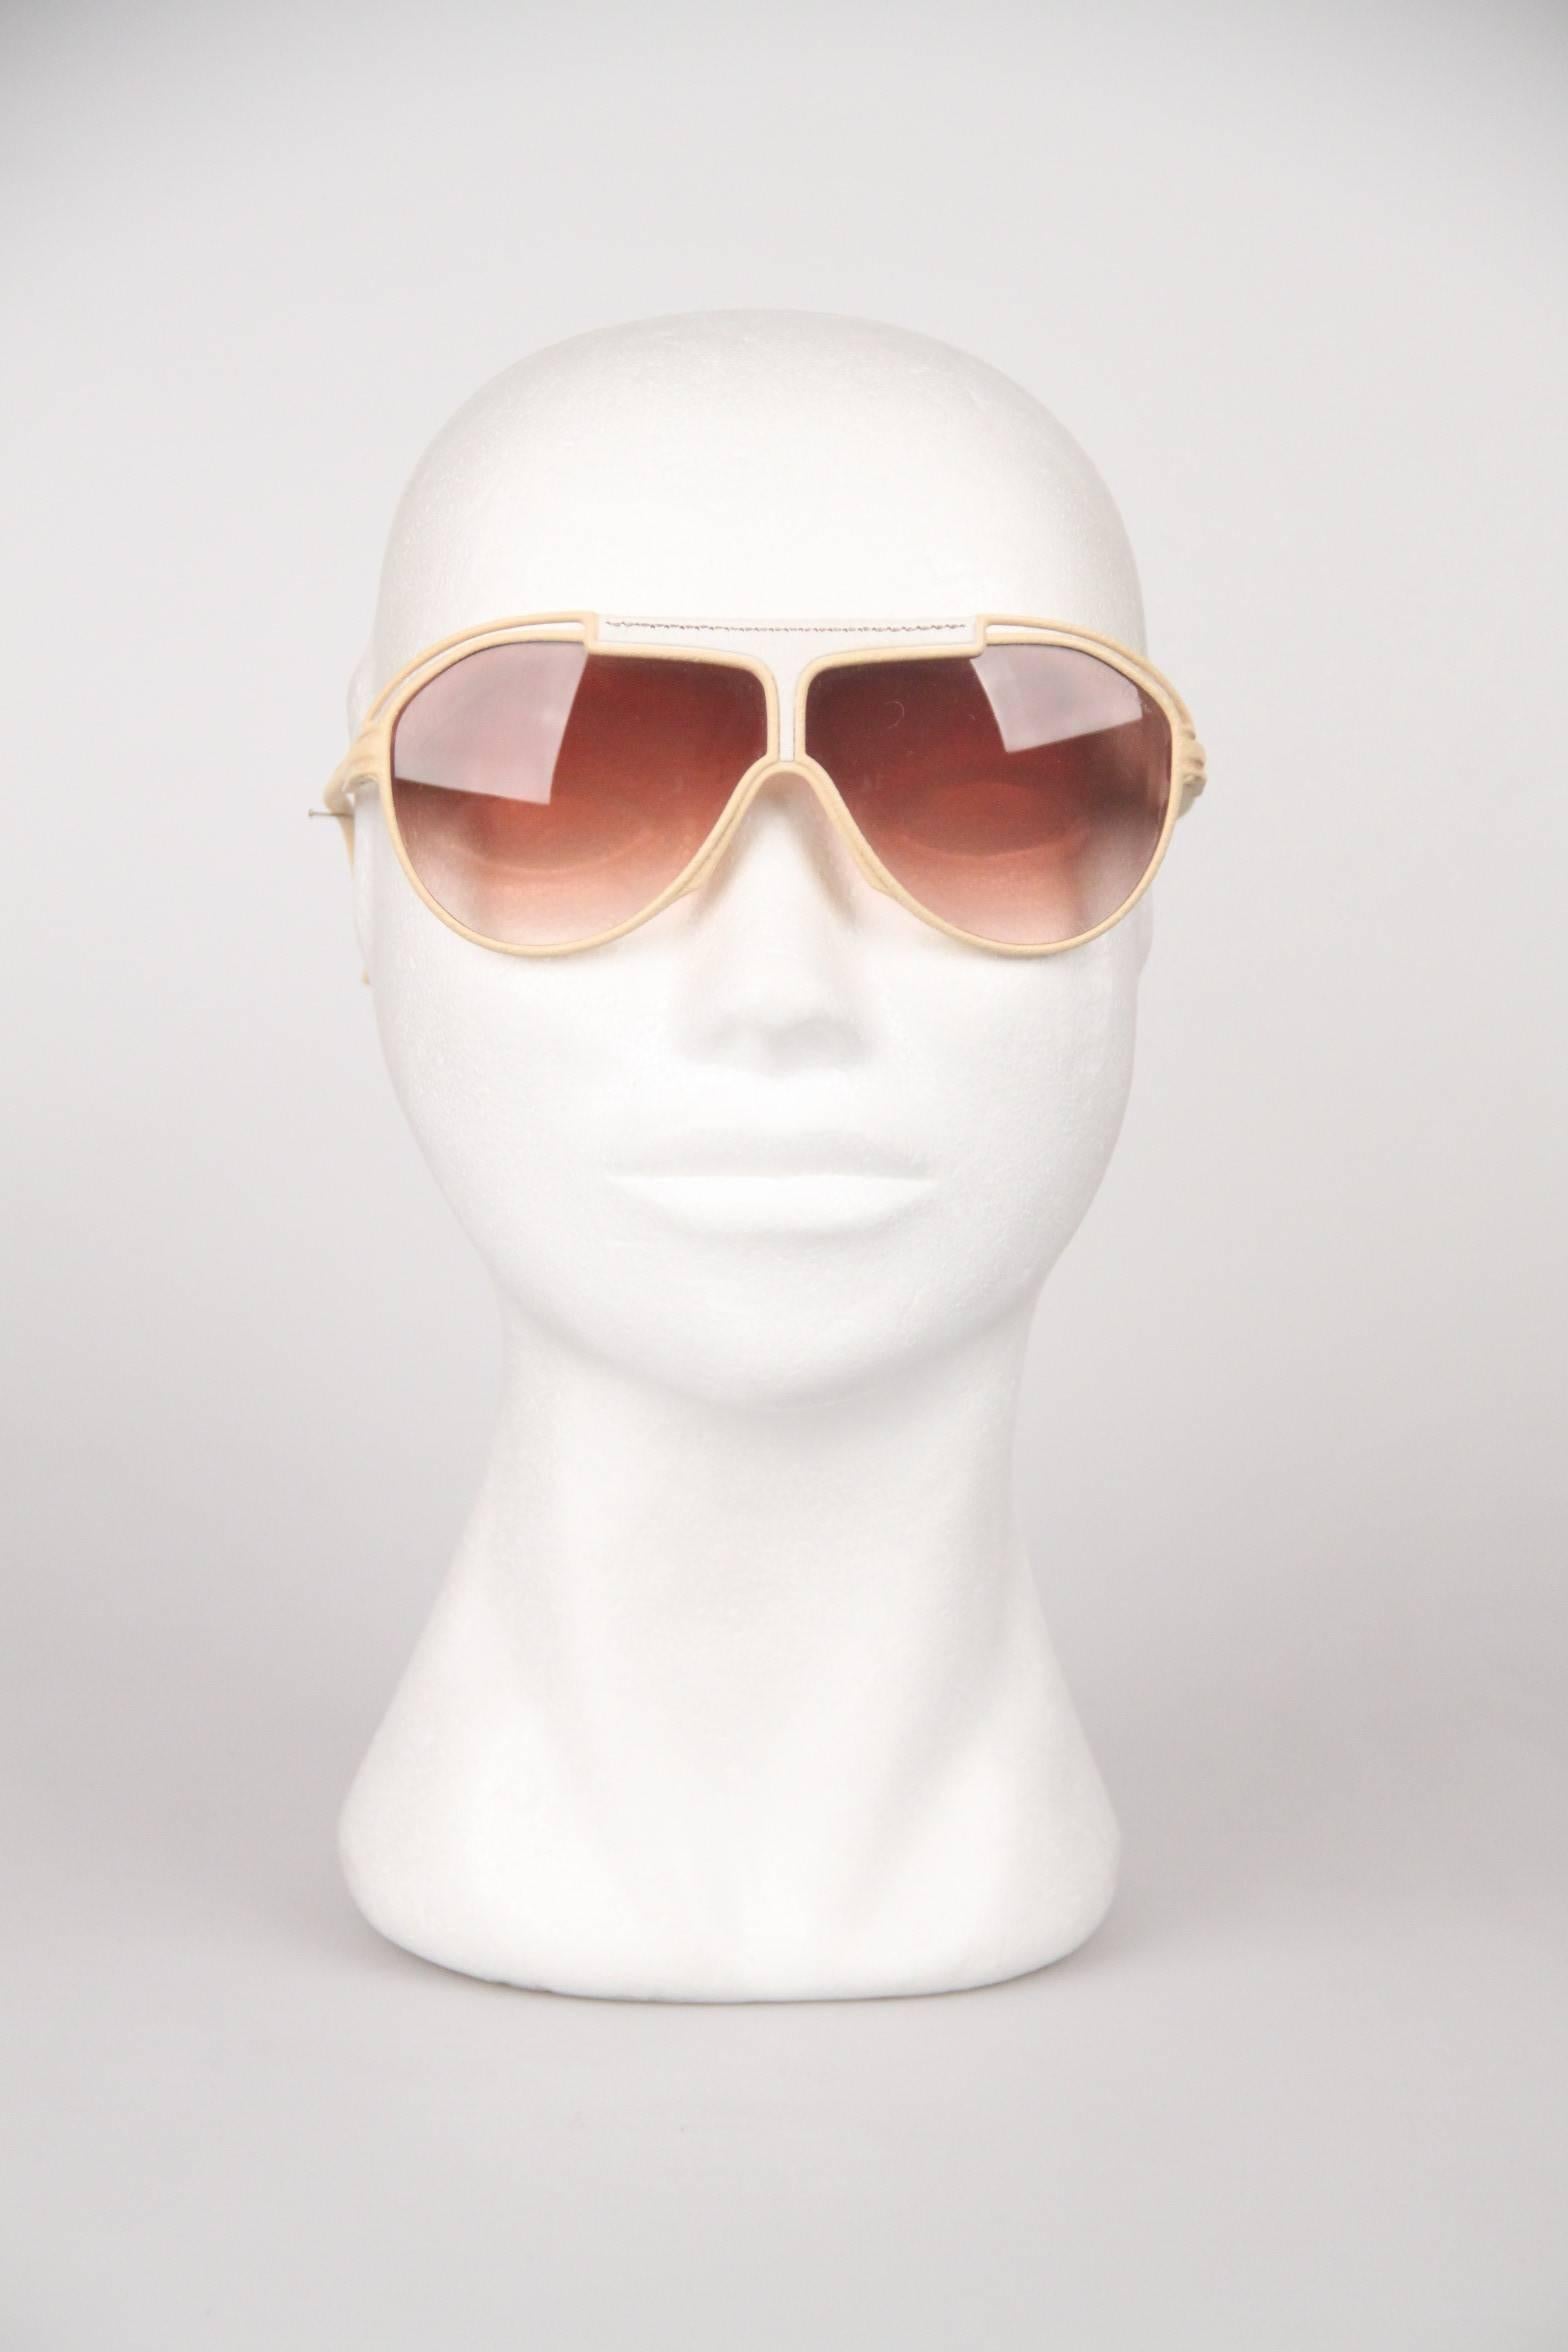 Yves Saint Laurent Vintage Mint Sunglasses Tan Leather Aviator 8359 Y90 3